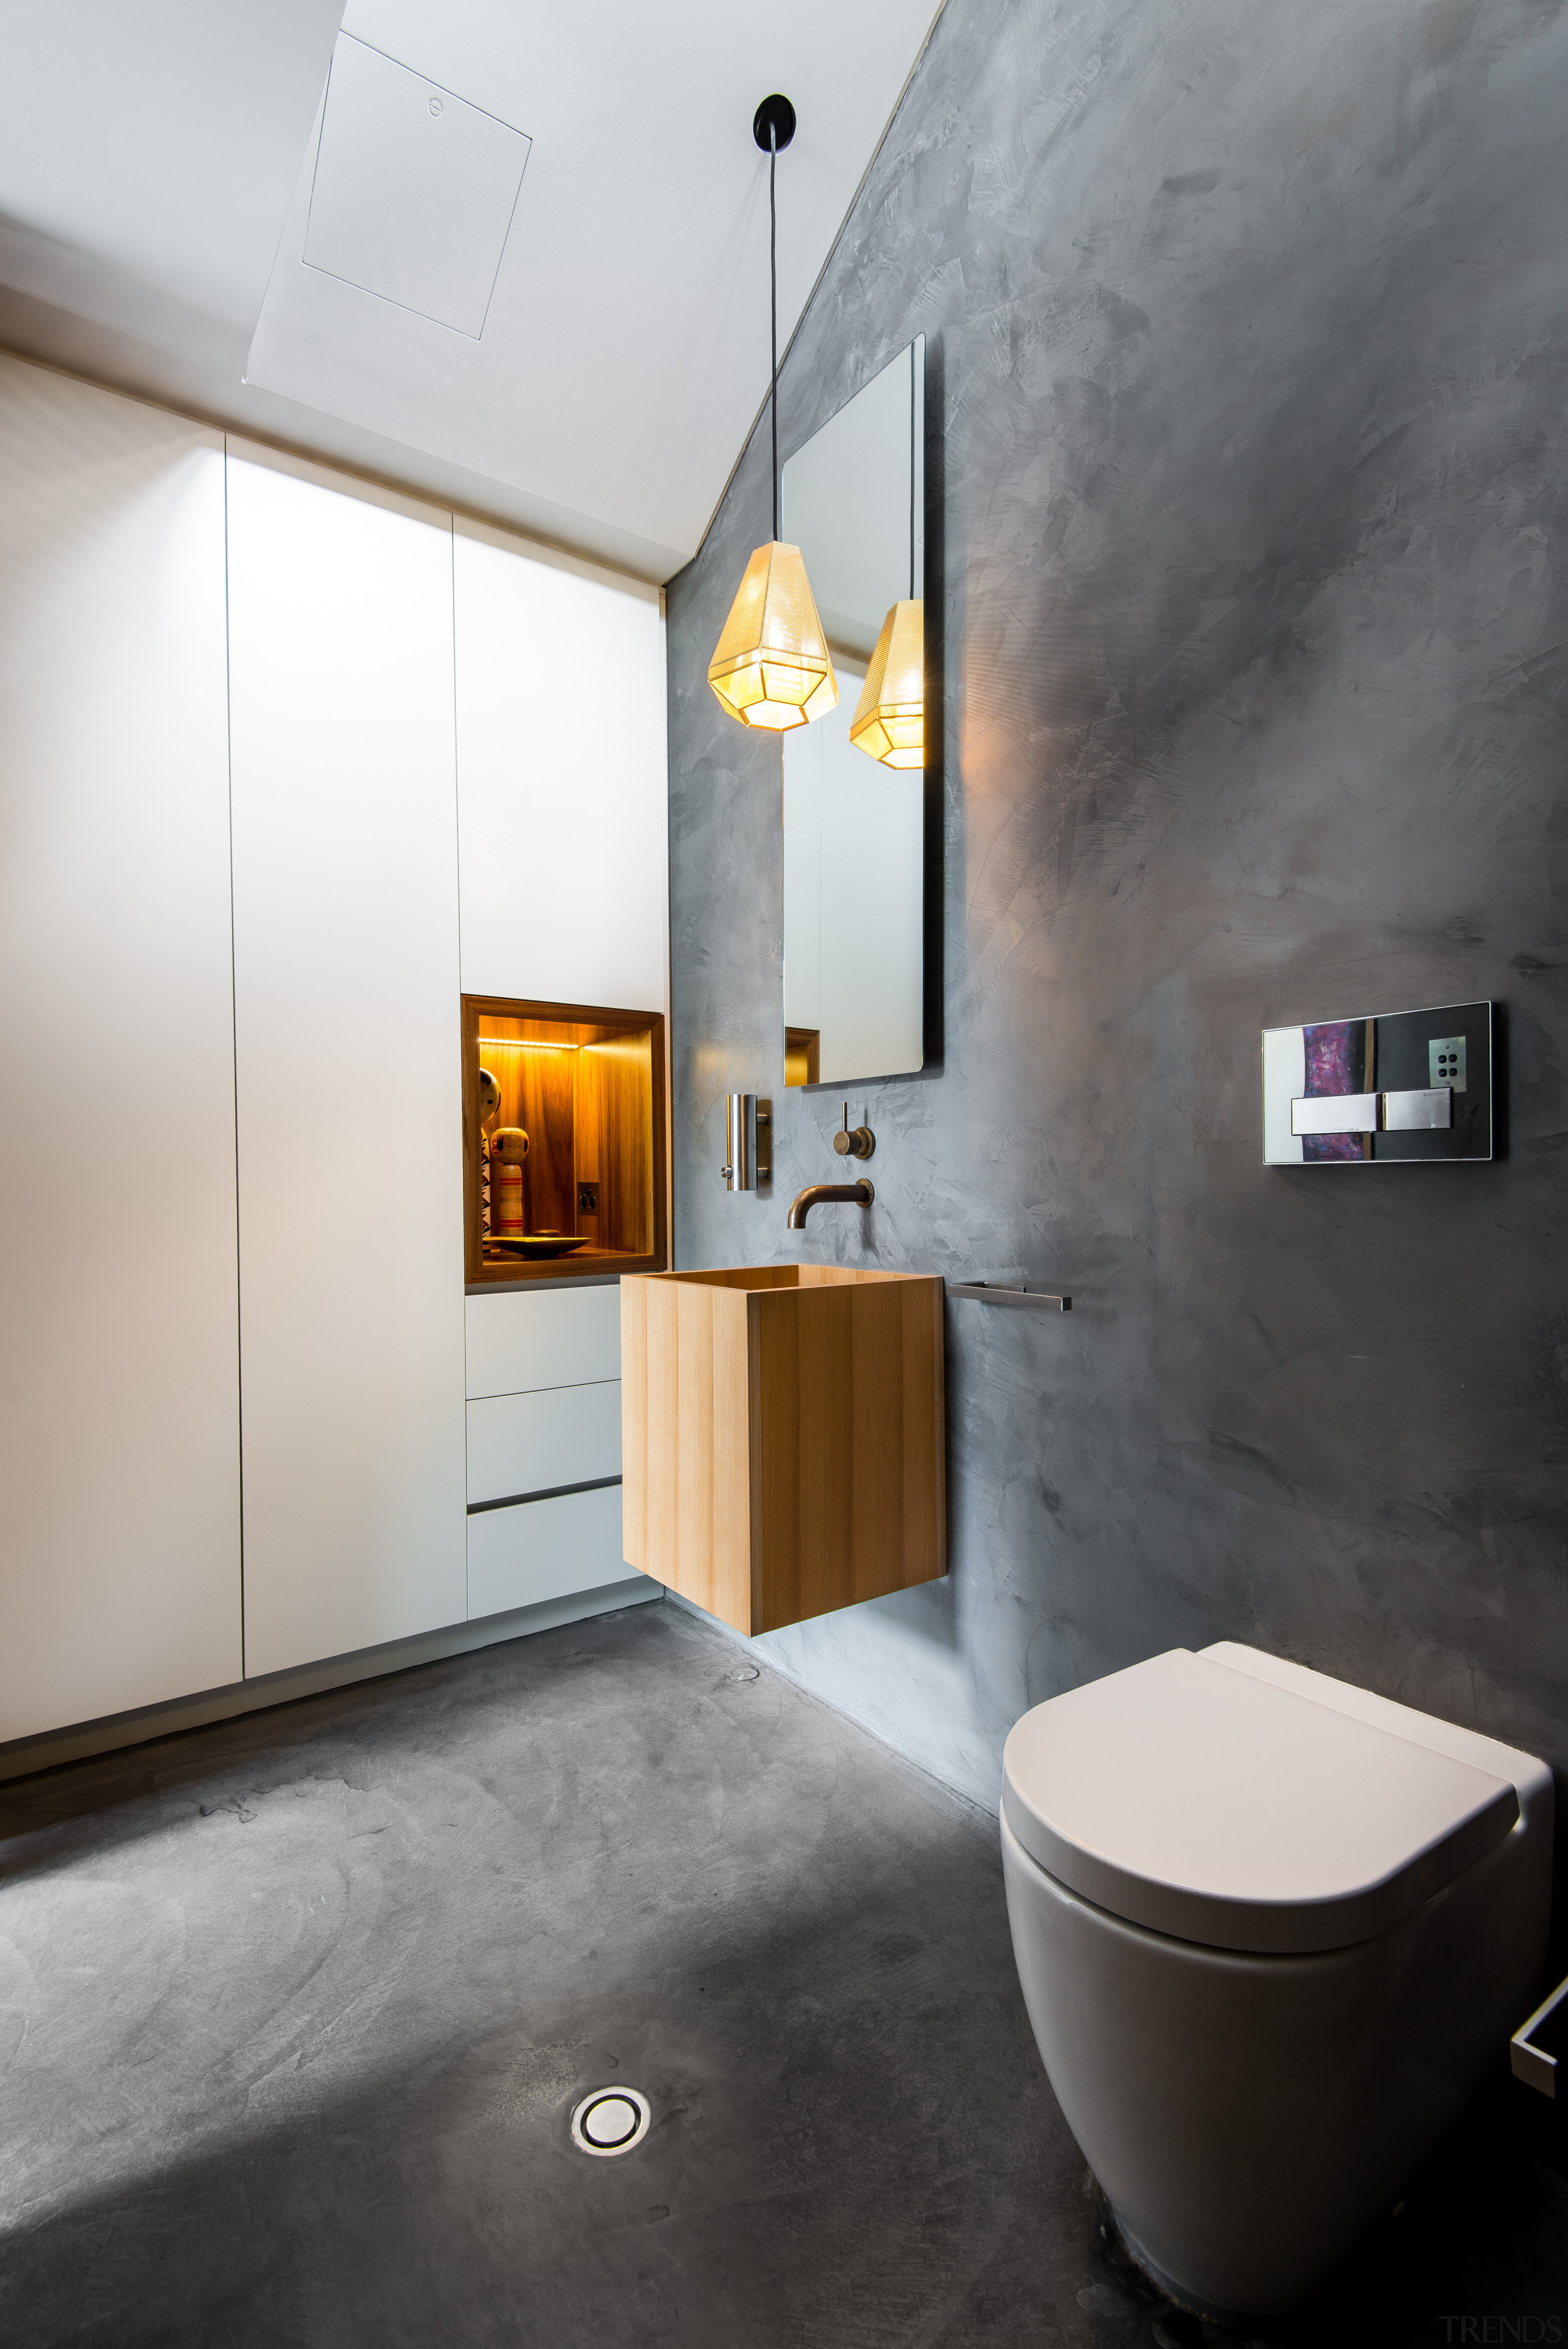 A wall niche in Tasmanian blackwood is in architecture, bathroom, floor, interior design, plumbing fixture, product design, room, sink, tap, wall, gray, black